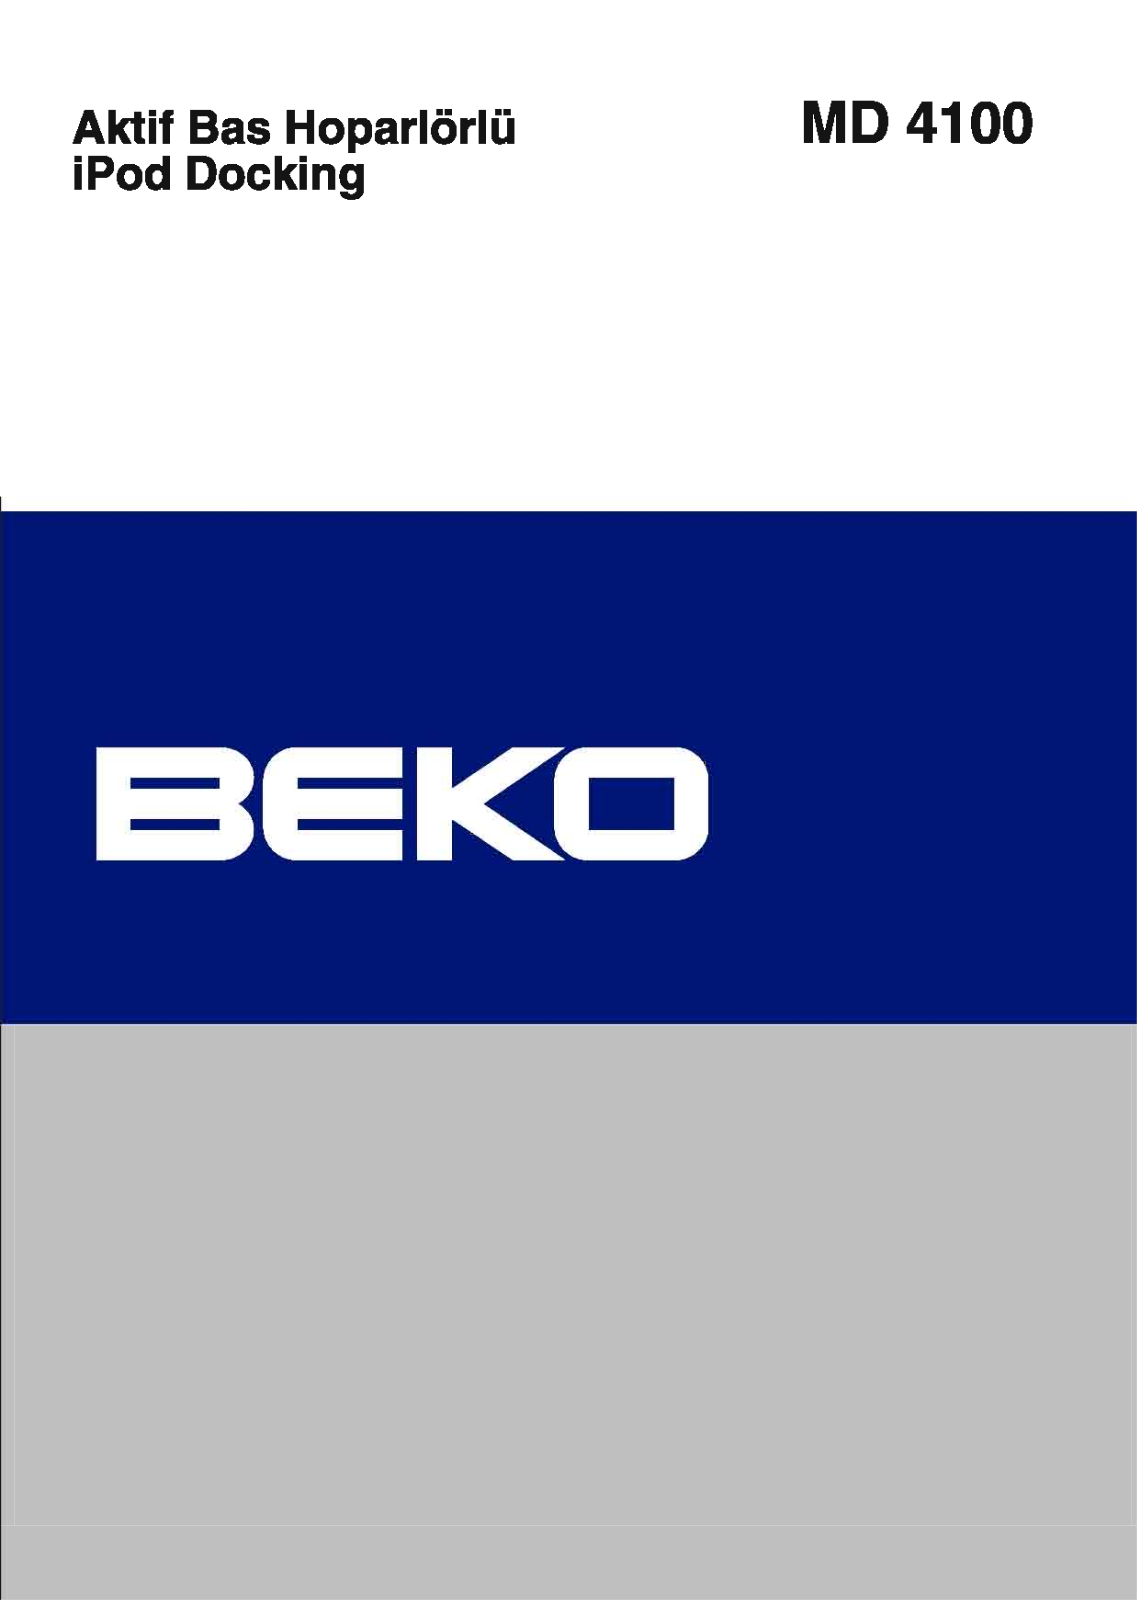 Beko MD 4100 Manual